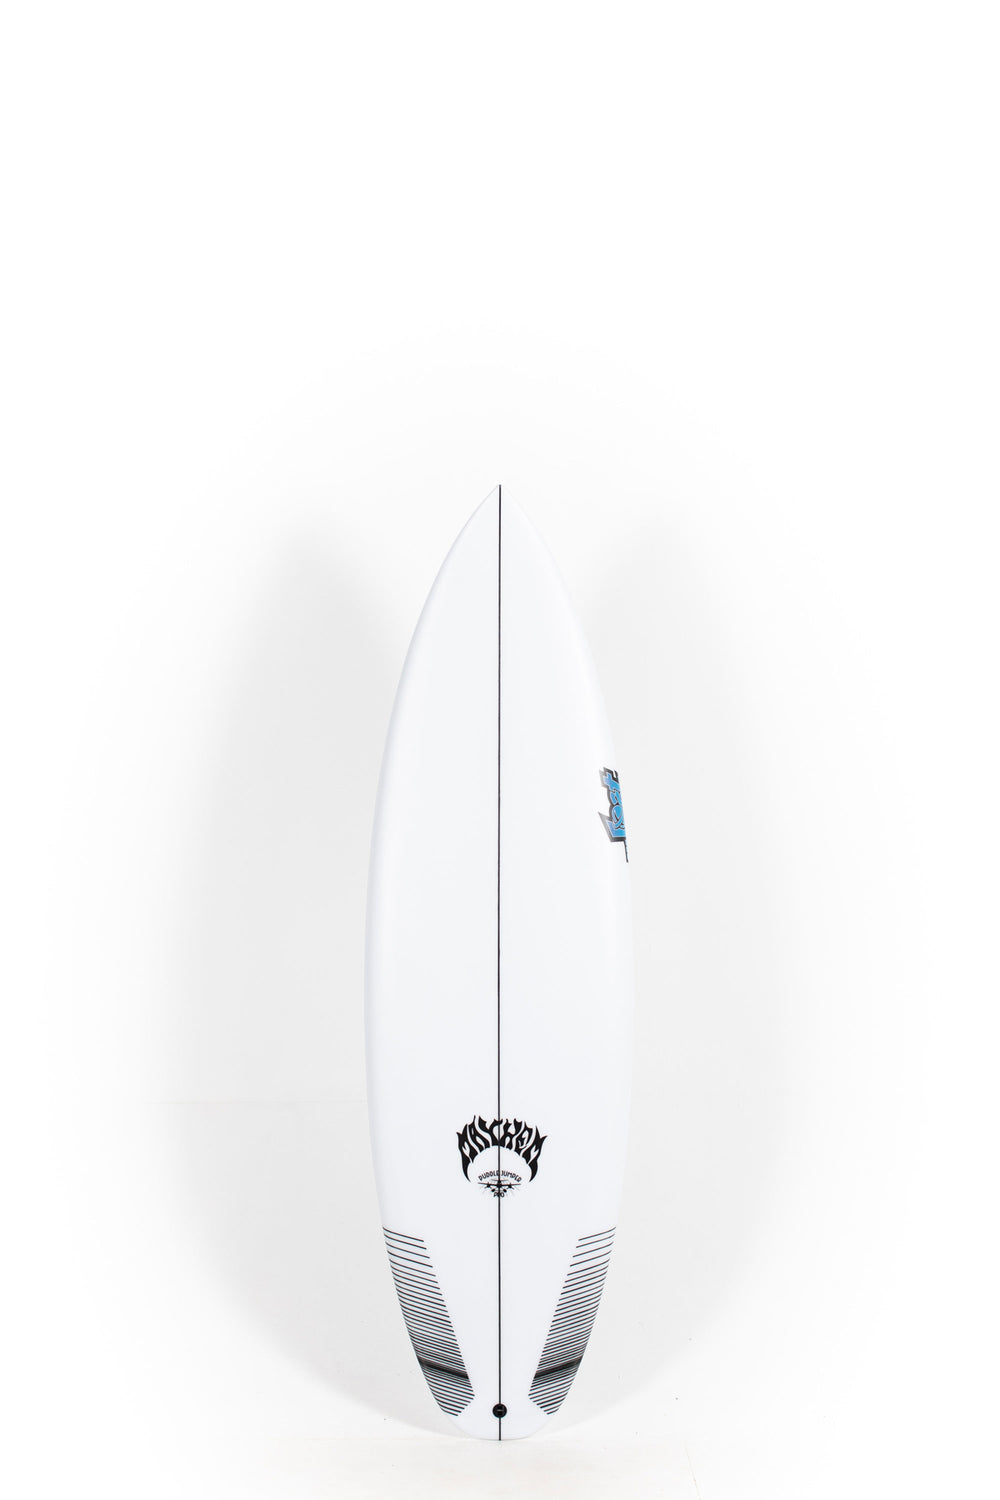 Pukas Surf Shop - Lost Surfboard - PUDDLE JUMPER-PRO by Matt Biolos - 5'11